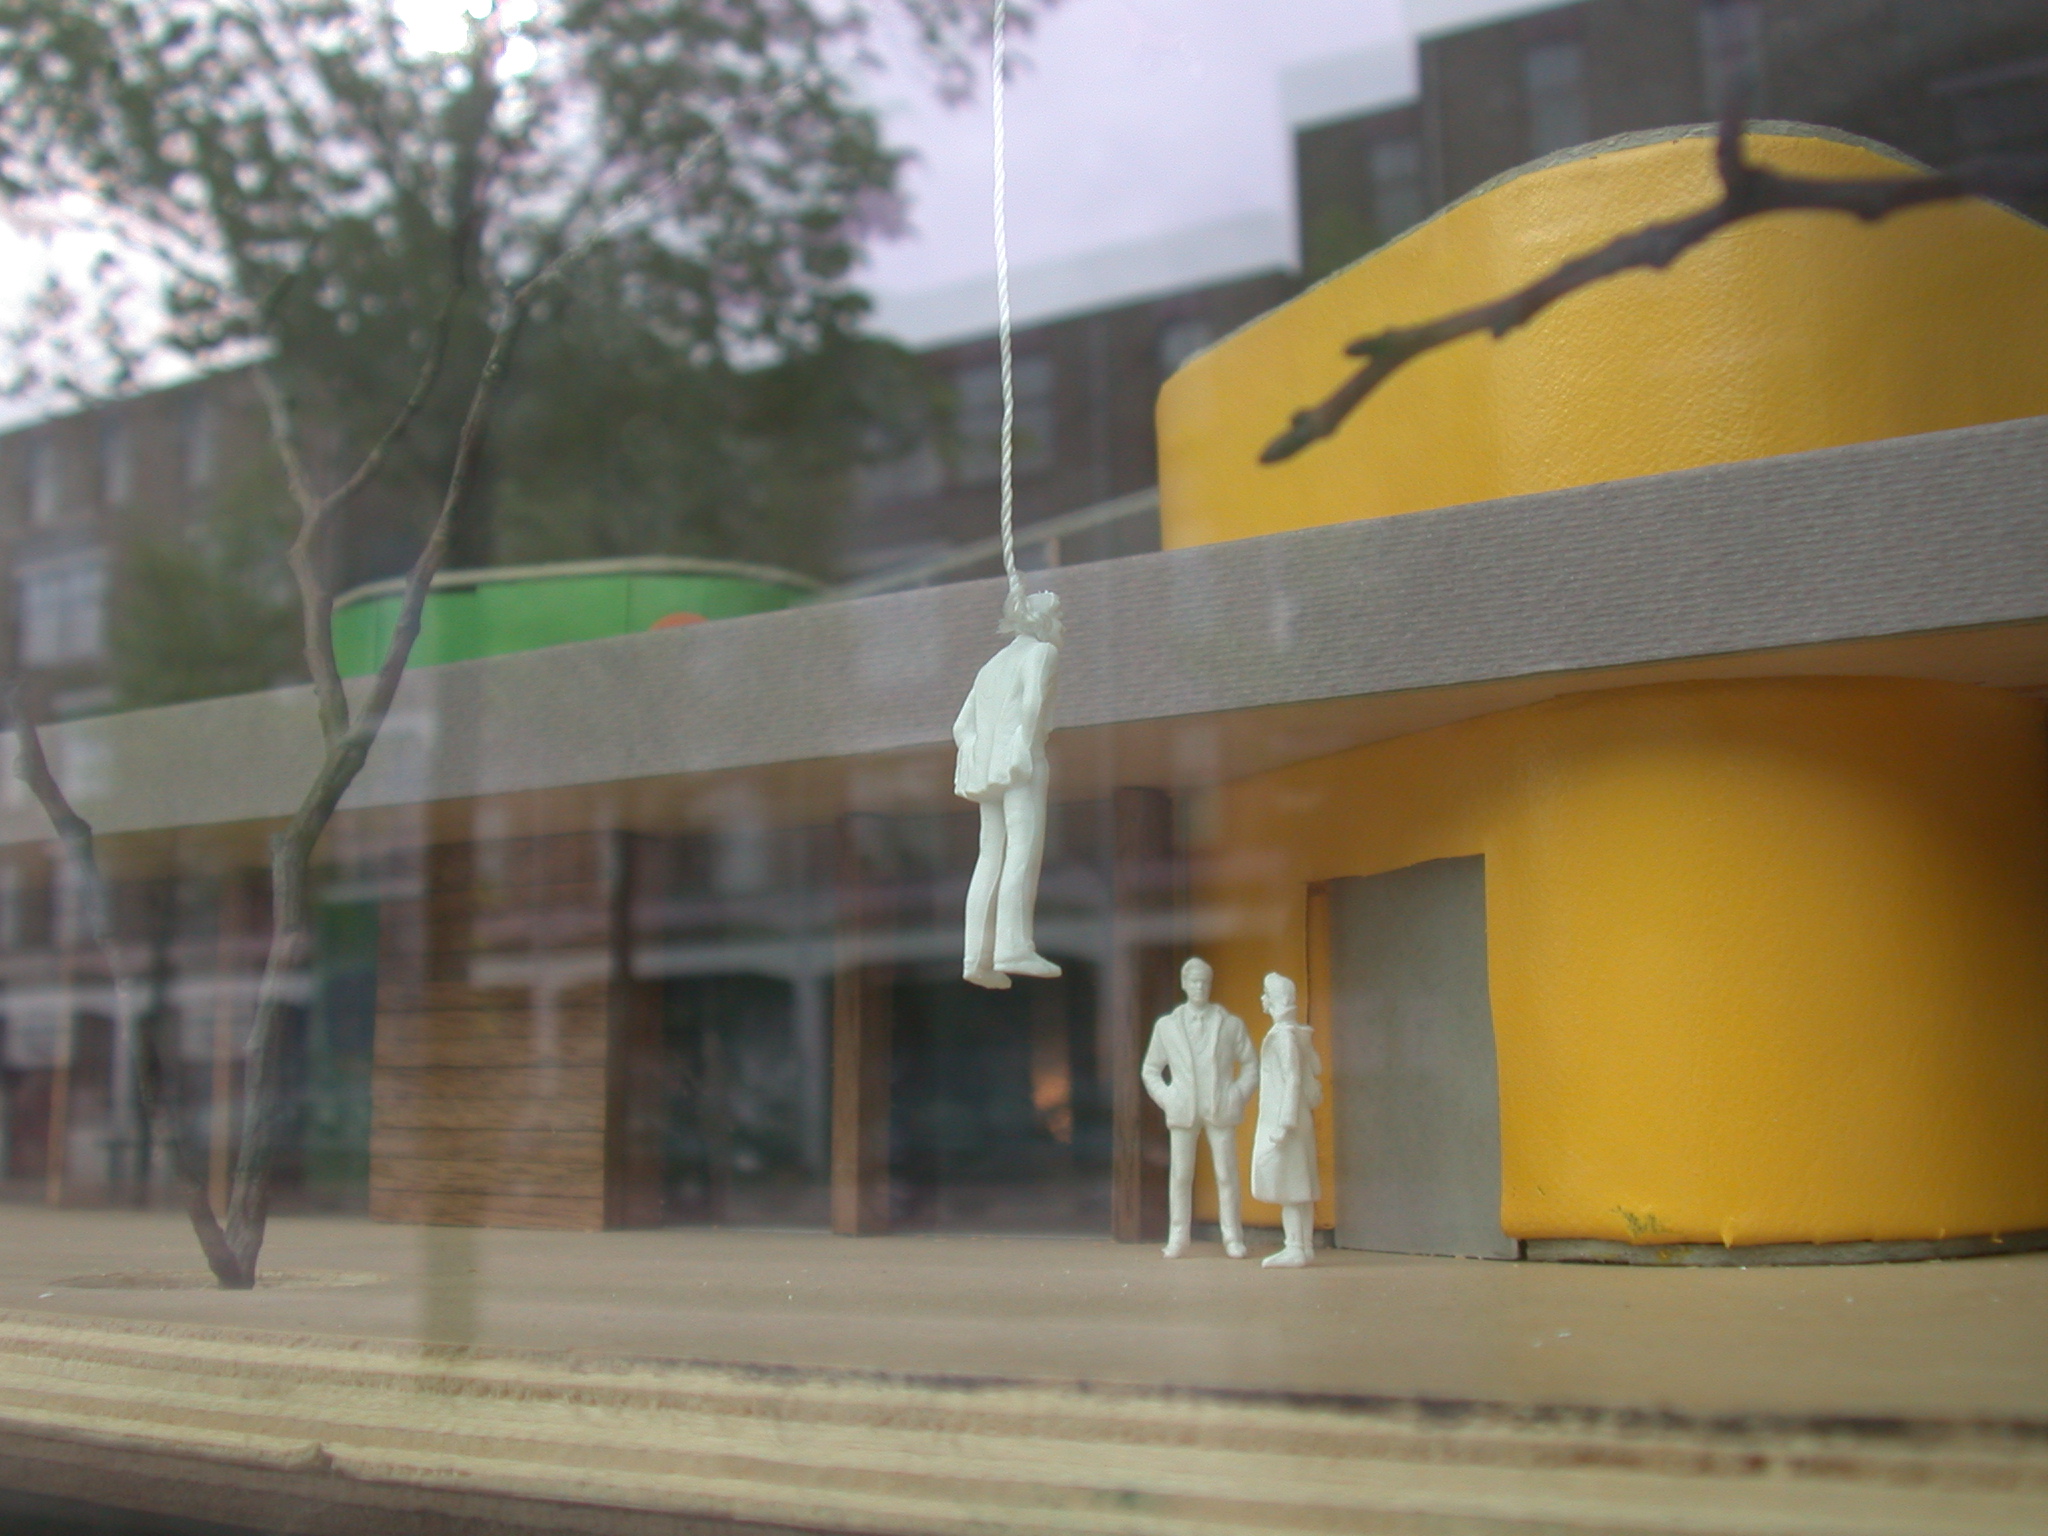 characters miscaleneous humanoids plastic figures hangman architecture exteriors maquette man woman suicide